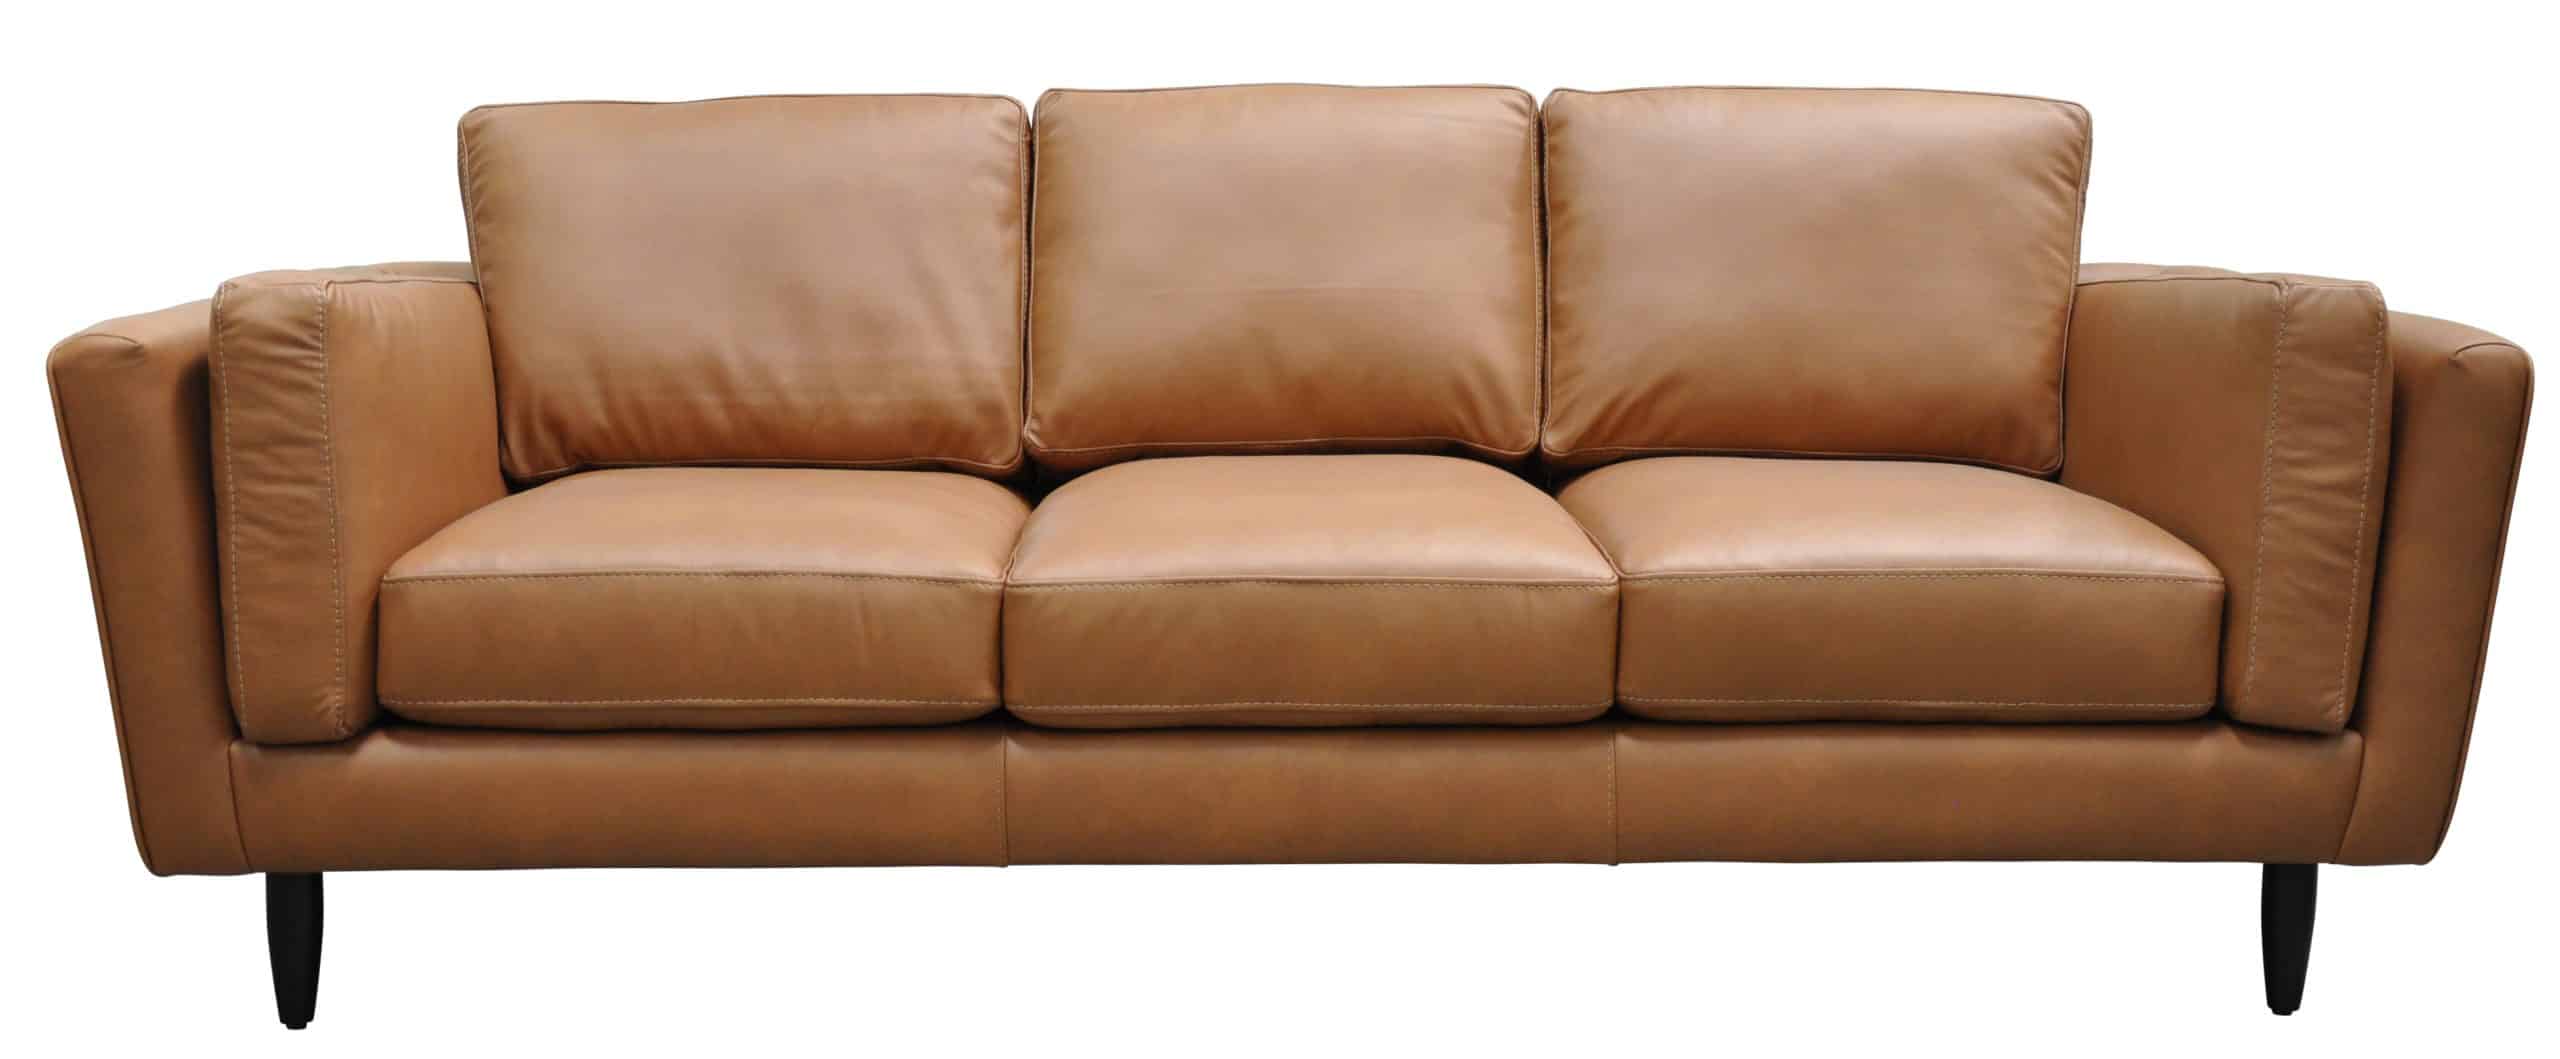 zander leather sofa review